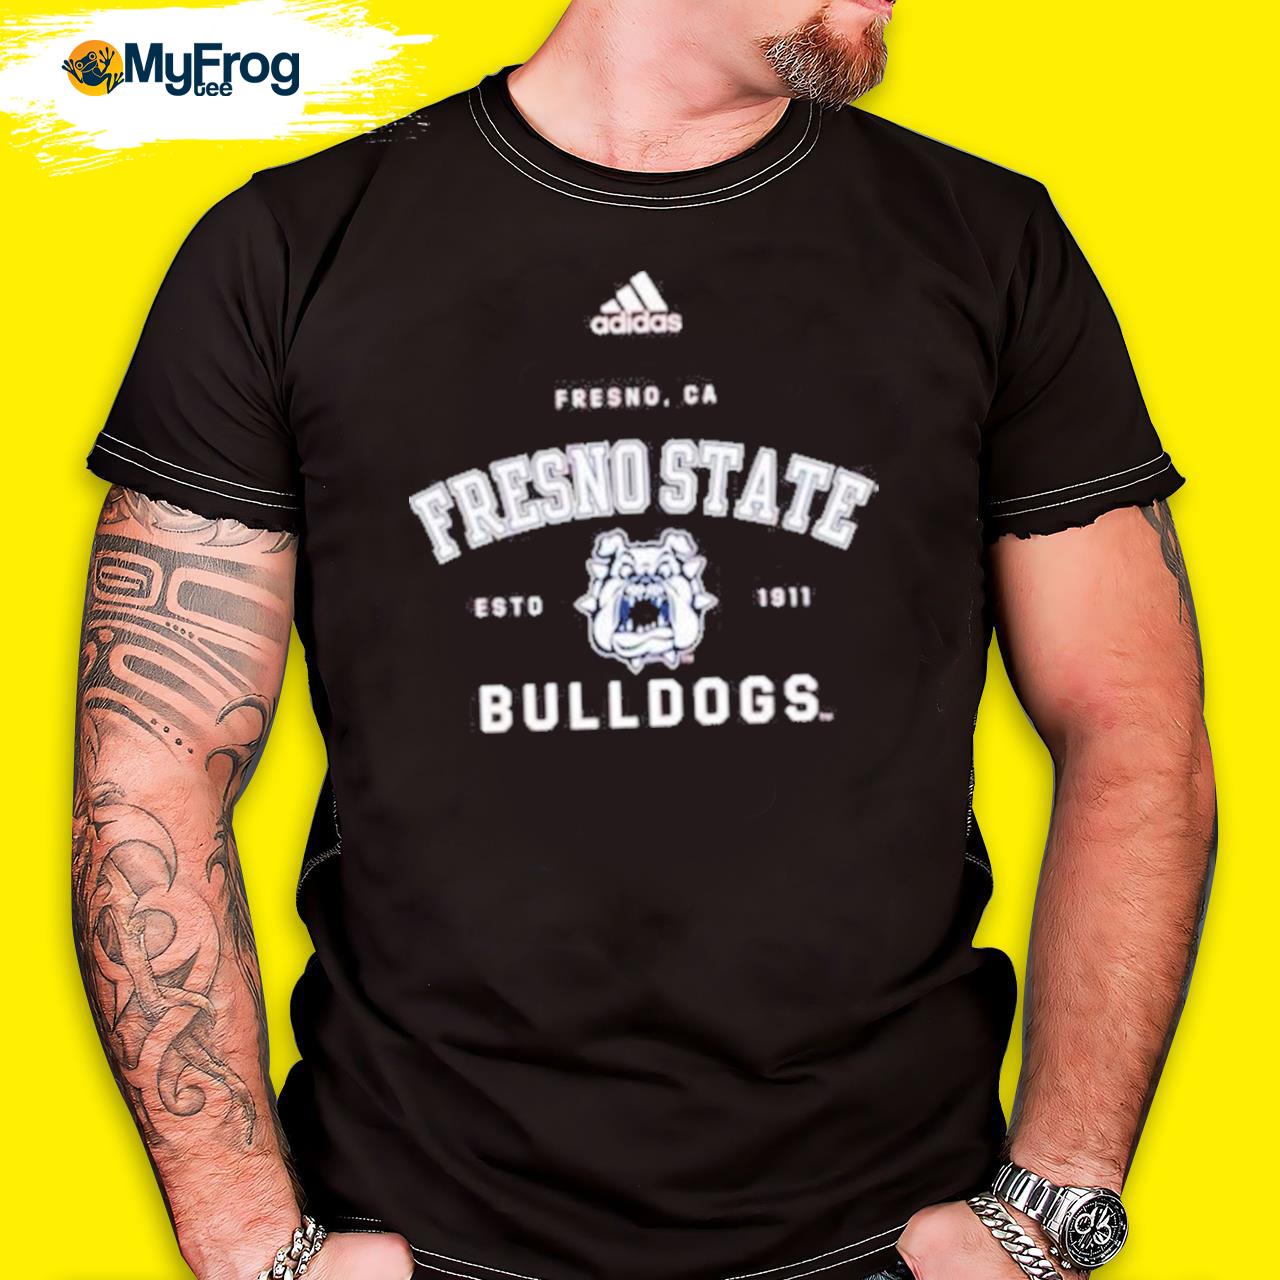 Adidas Fresno State Bulldogs 1911 Tee shirt